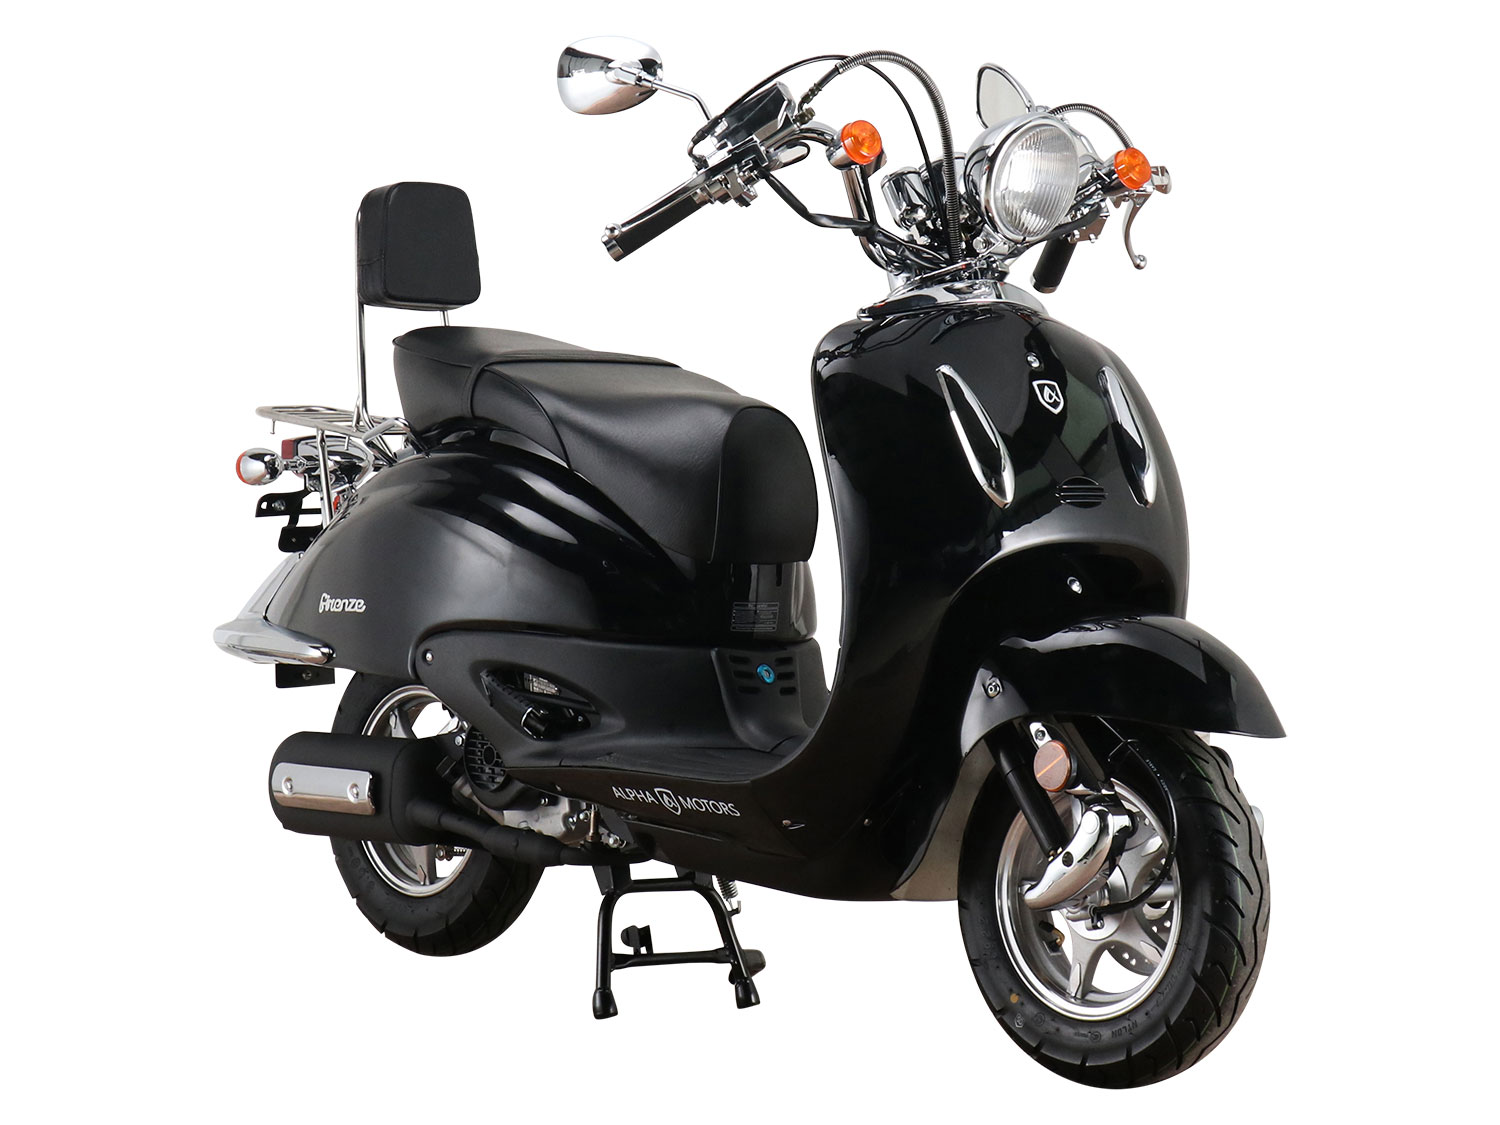 Flex-Tech Motorroller Firenze 125 ccm, schwarz günstig kaufen